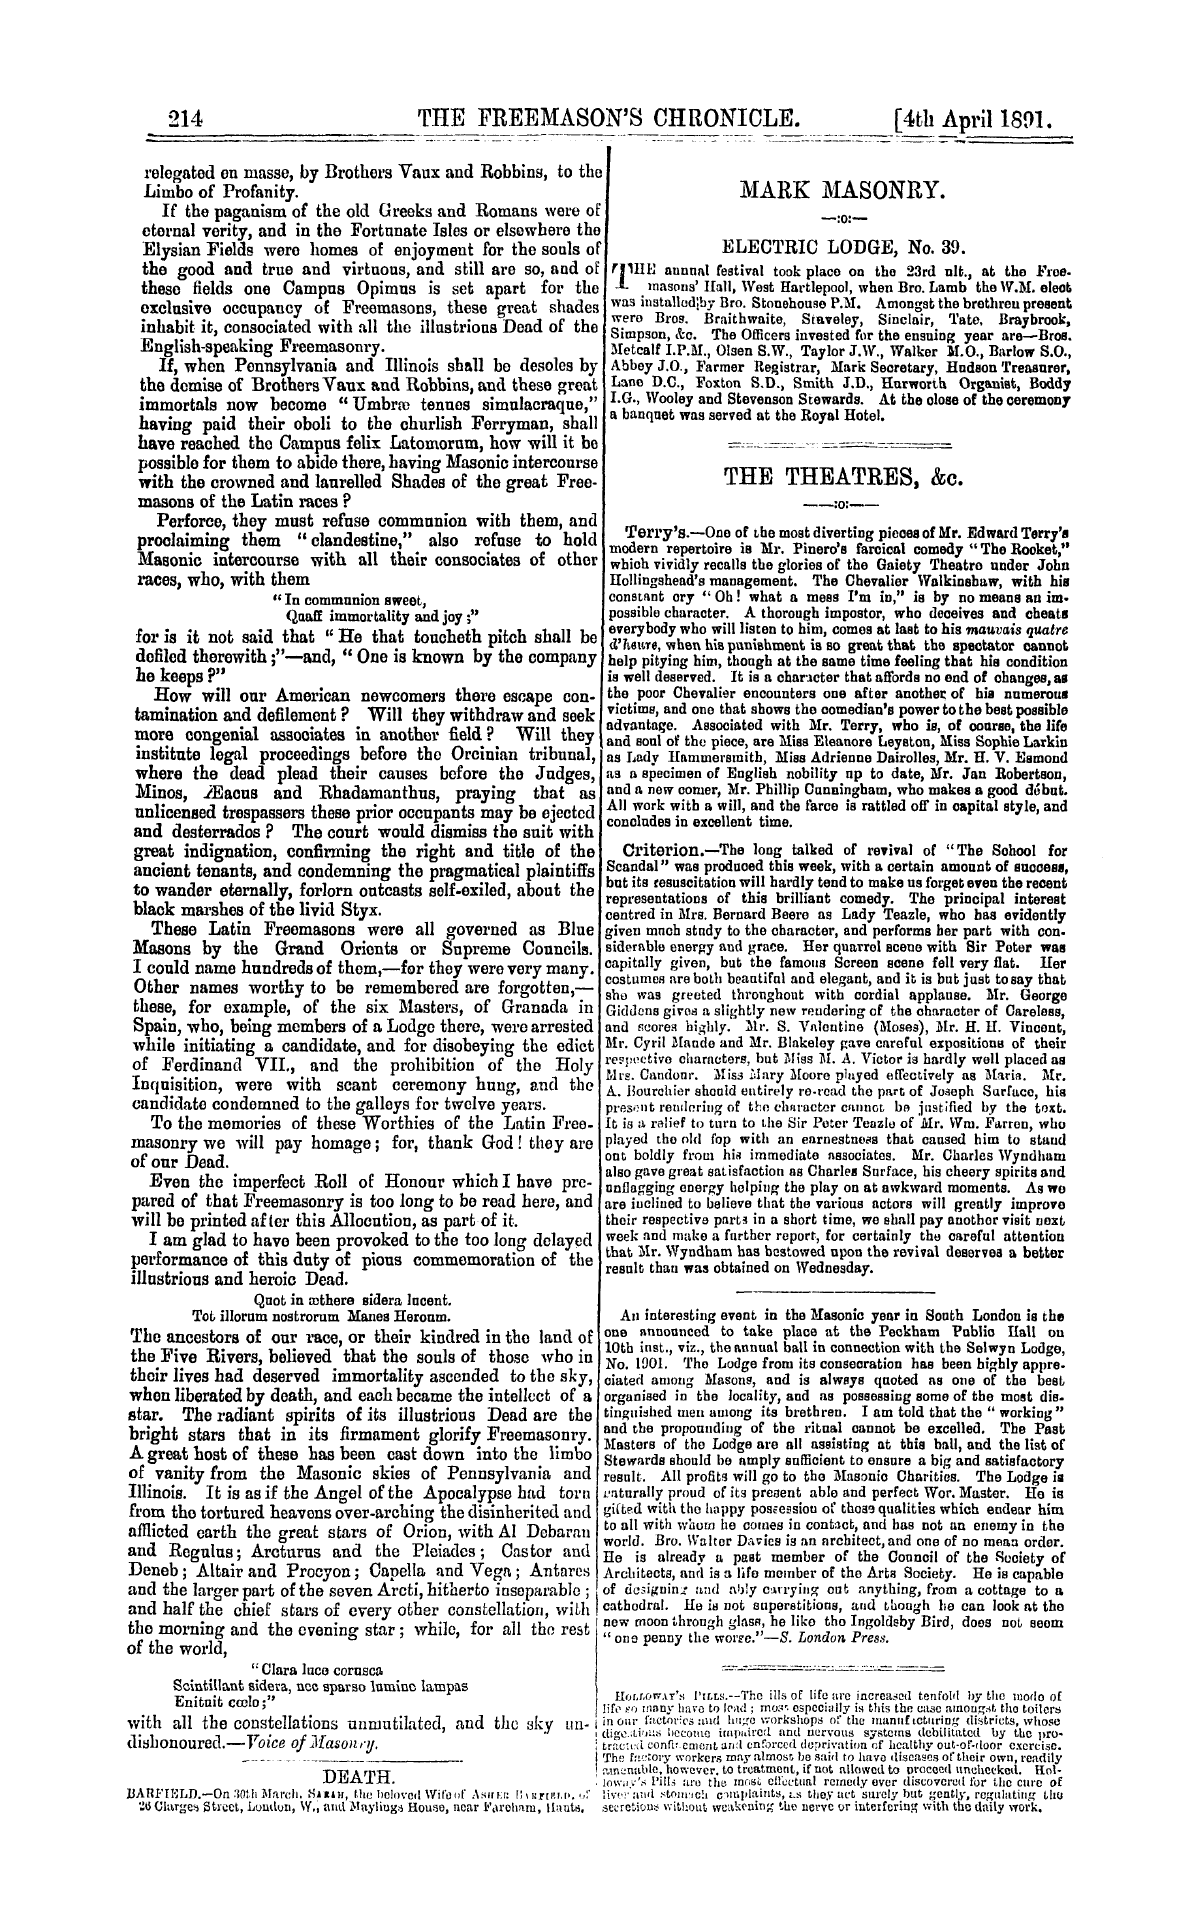 The Freemason's Chronicle: 1891-04-04 - Death.